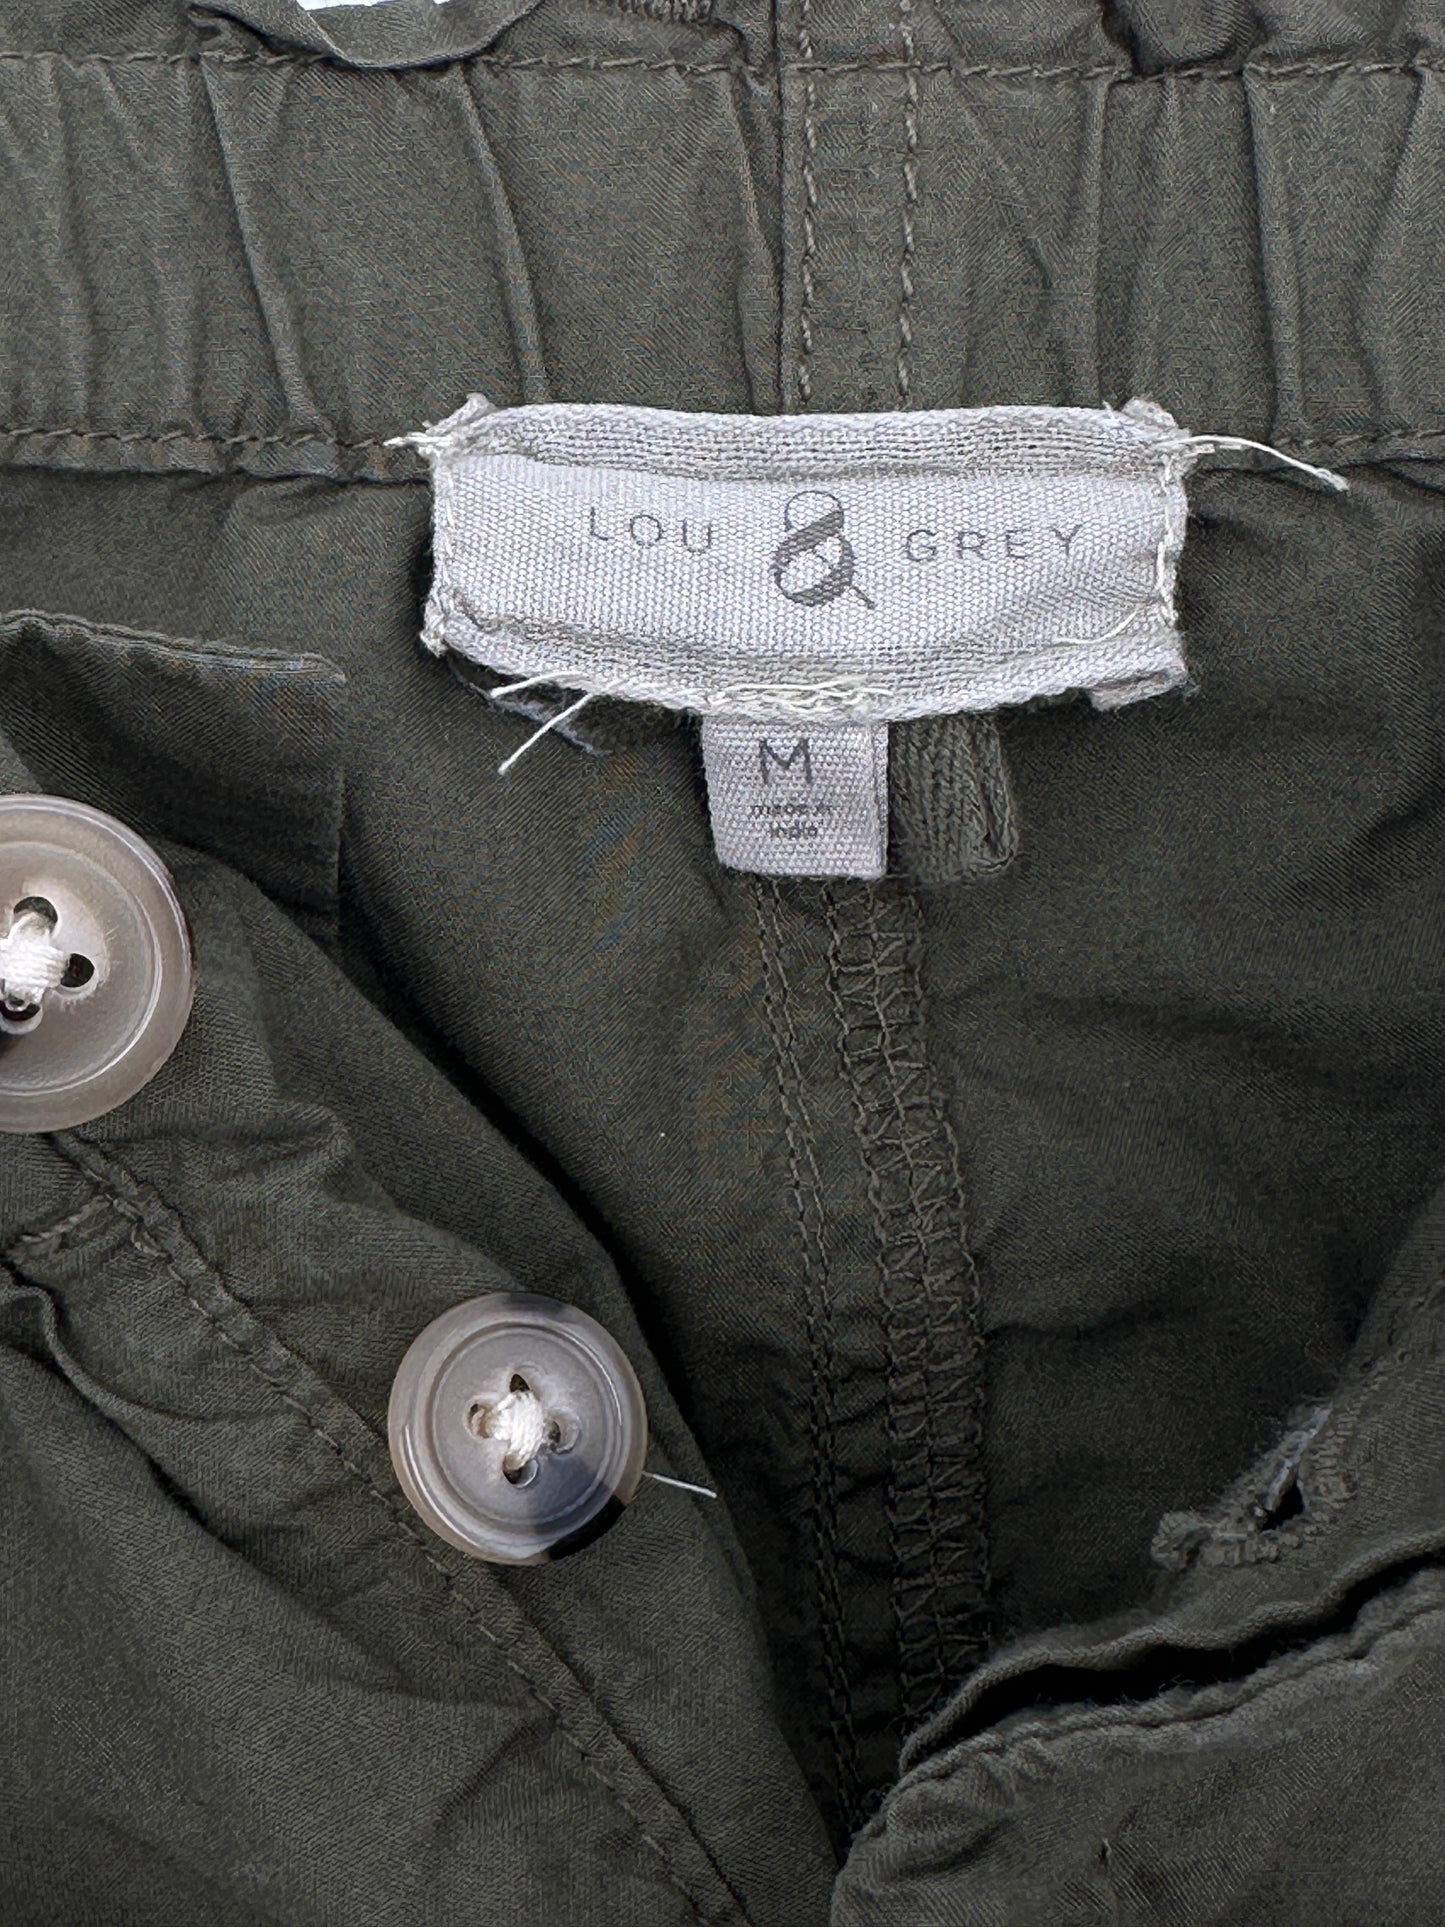 Lou & Grey Size M Olive Green Cotton Elastic Waist Pants